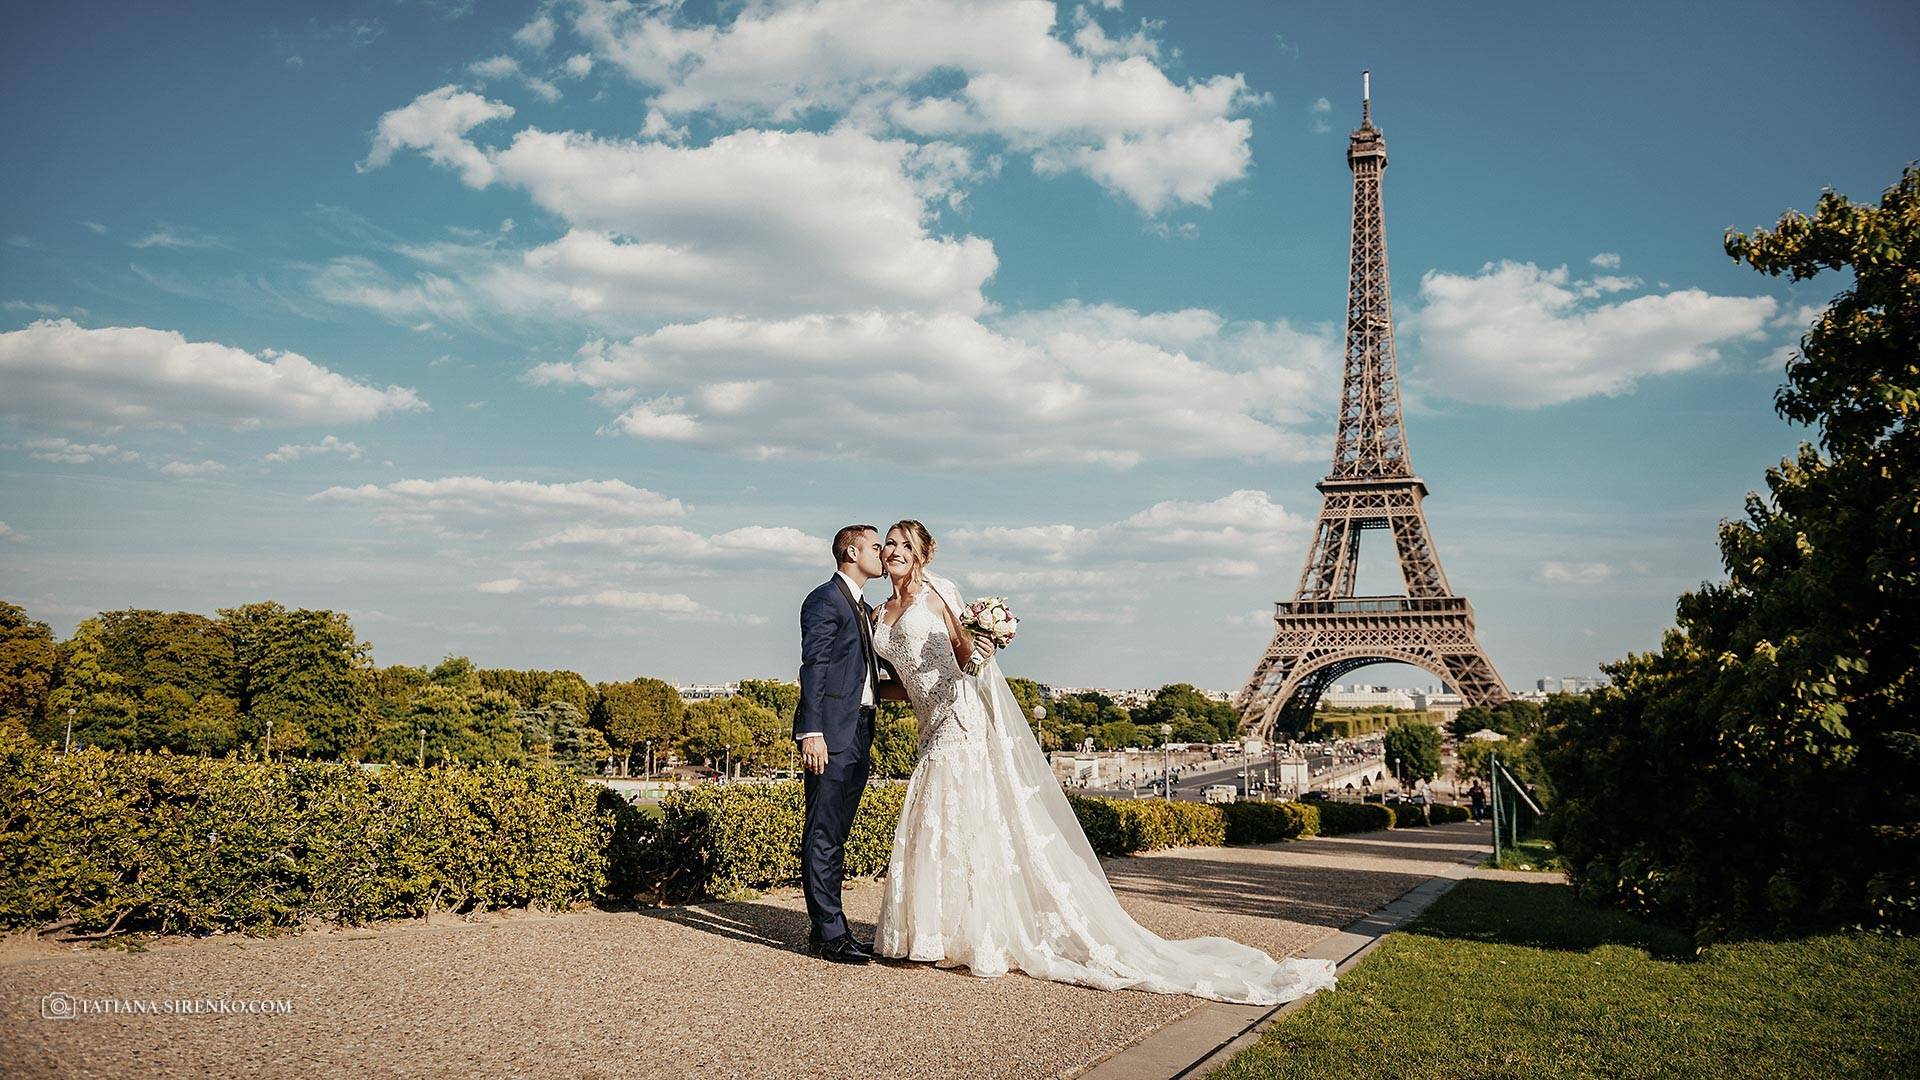 Свадьба во французском стиле - идеи оформления, образ молодоженов фото и видео торжества